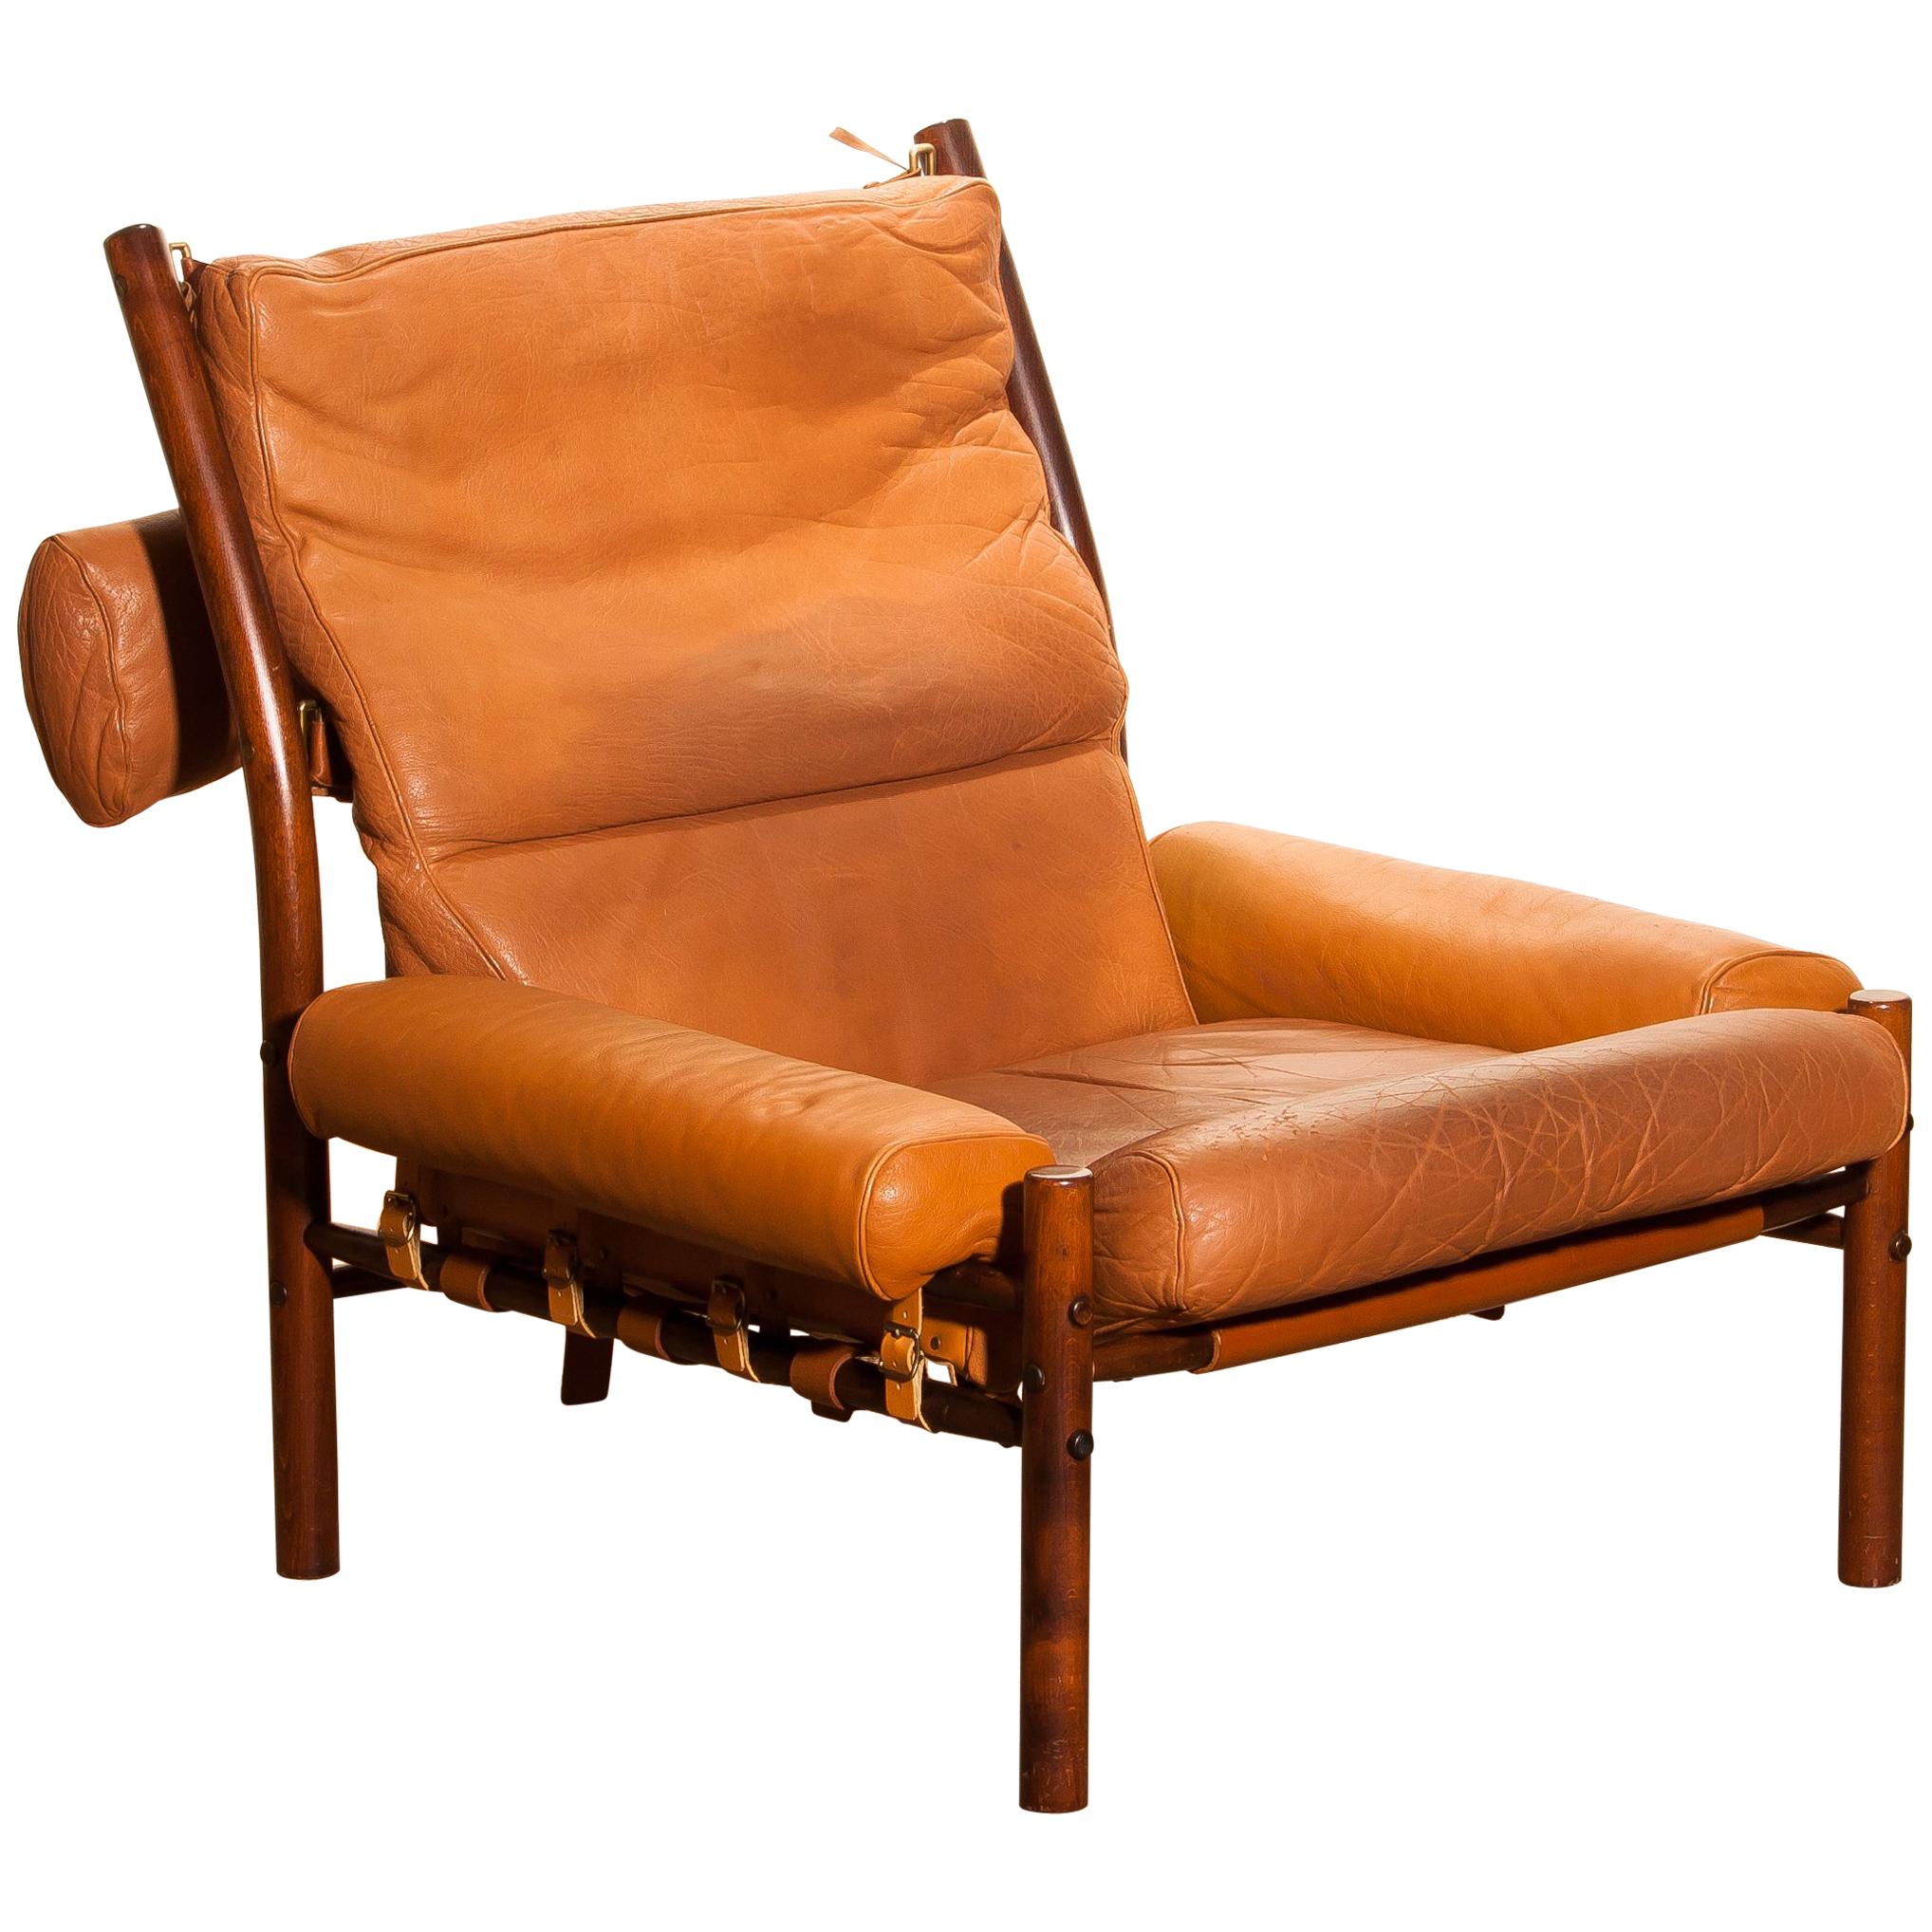 1968, Cognac Leather Safari Chair "Inca" by Arne Norell Möbler AB, Sweden